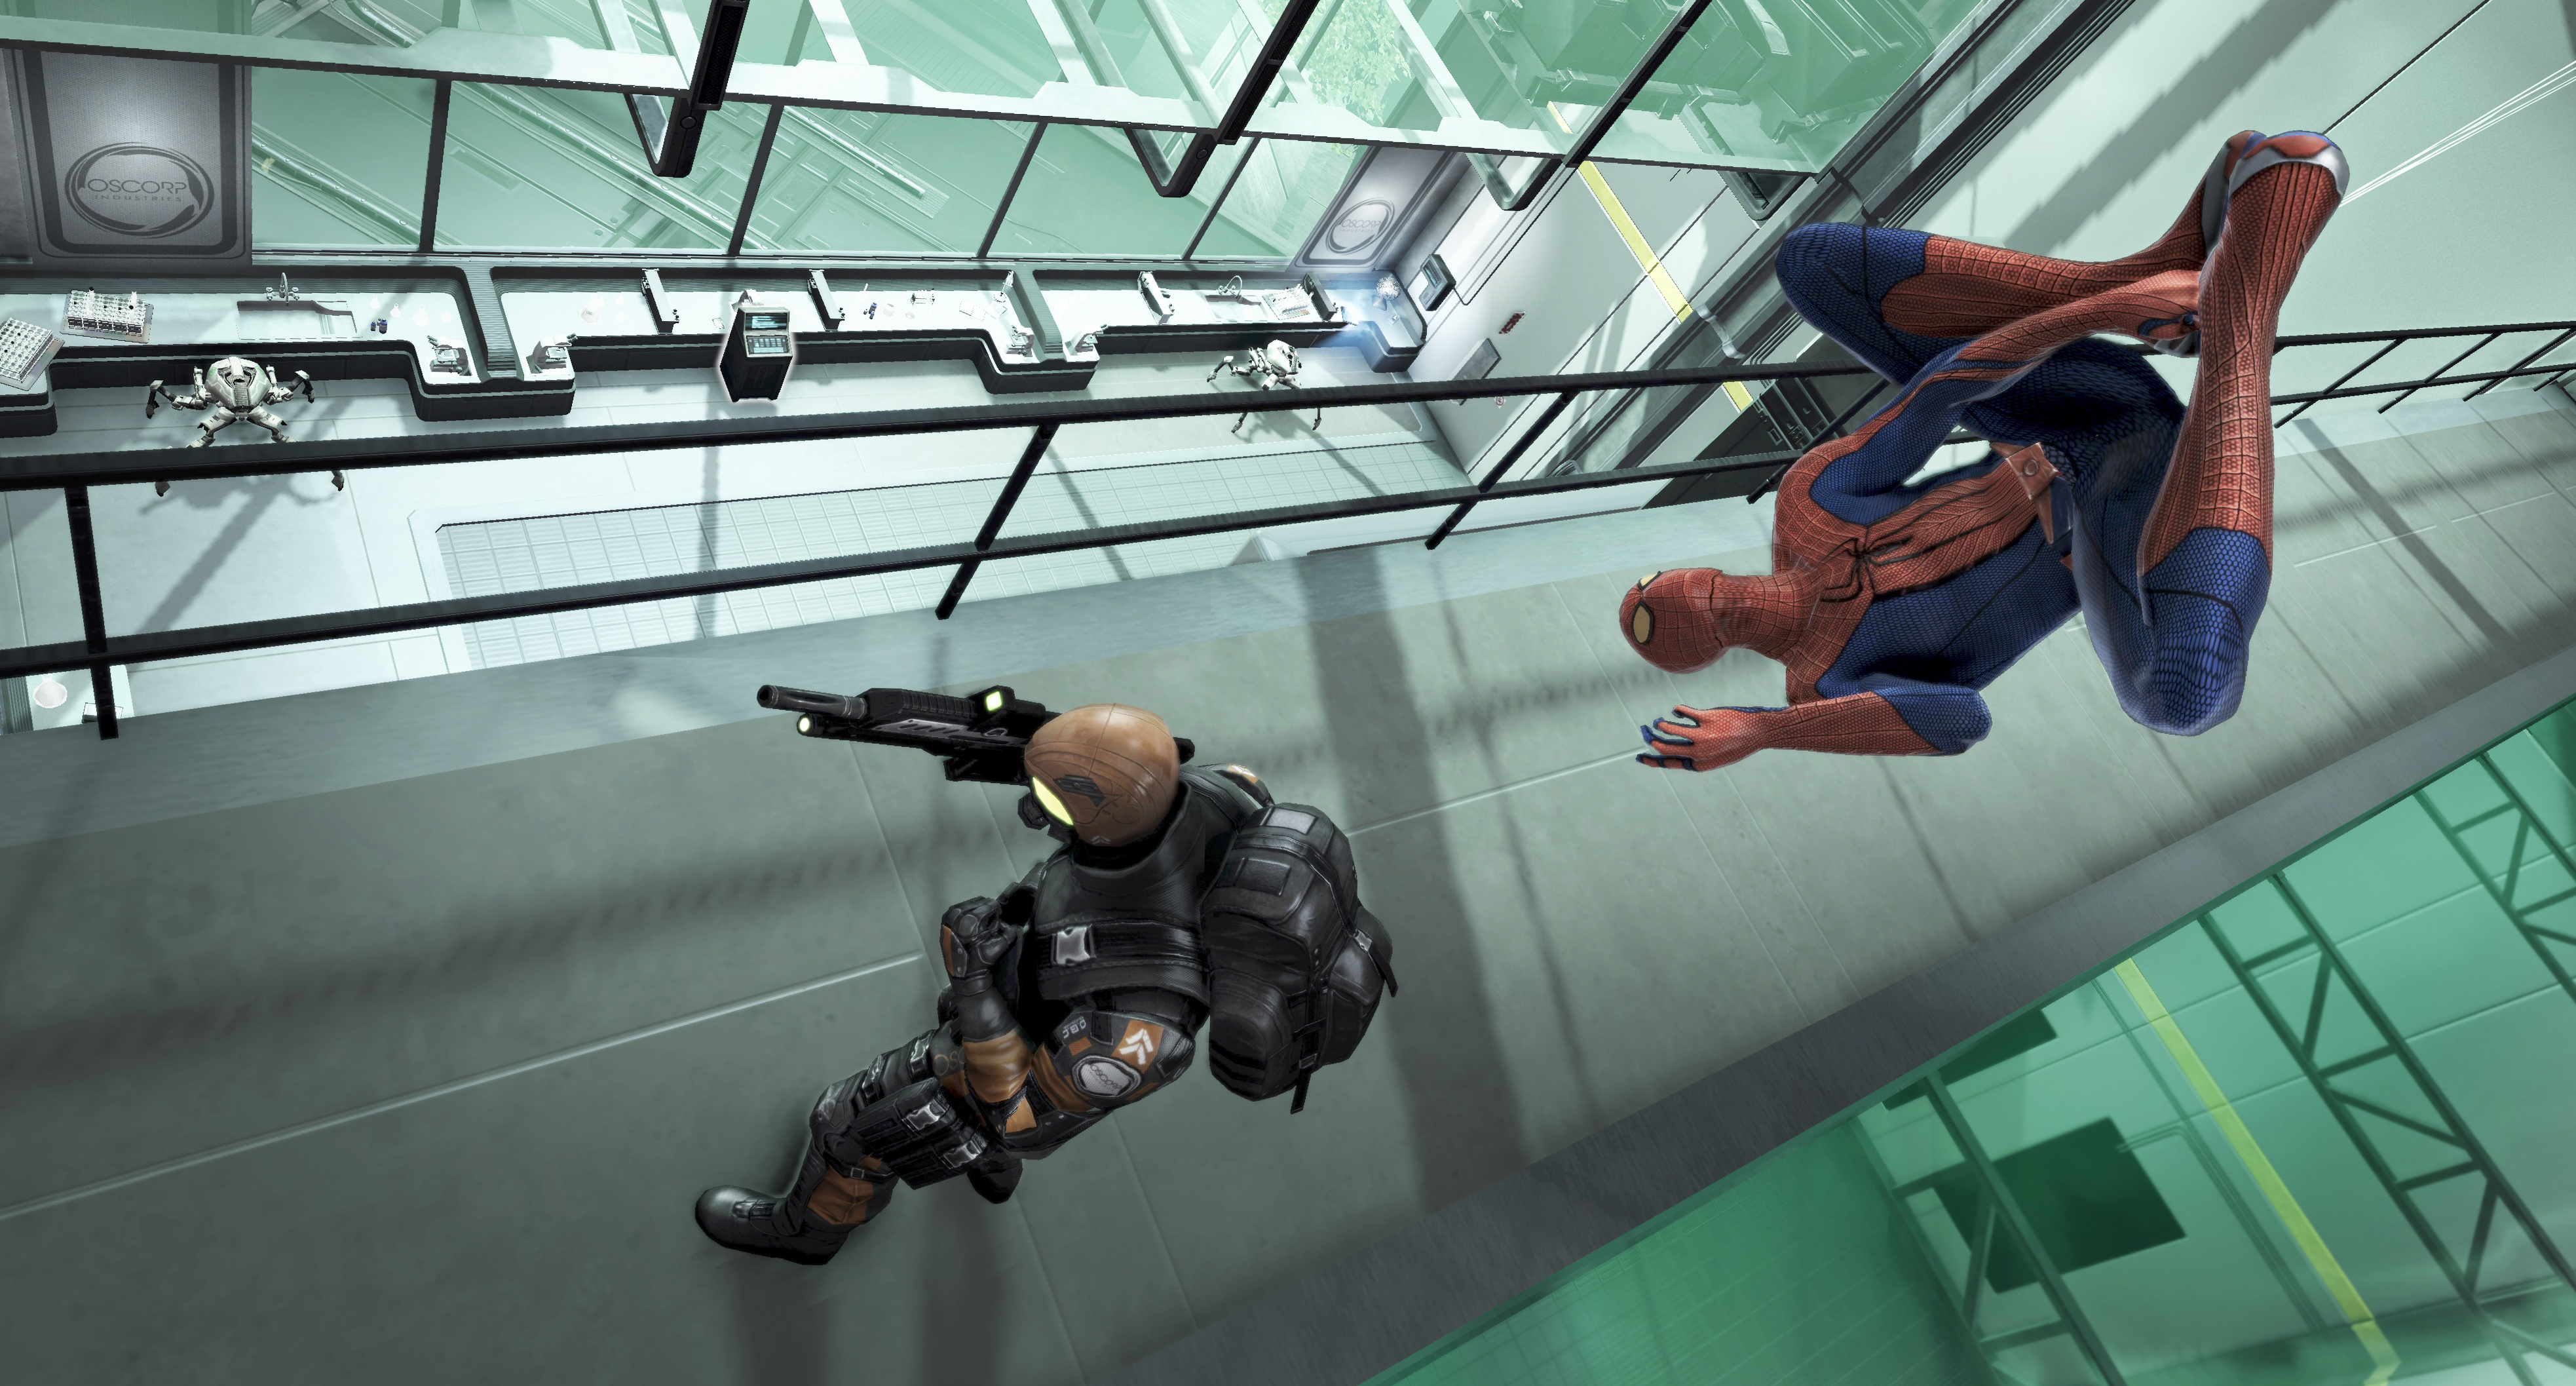 5 man игры. The amazing Spider-man игра. The amazing Spider-man 1 игра. Новый человек паук игра 2012. Человек паук игра 2012.